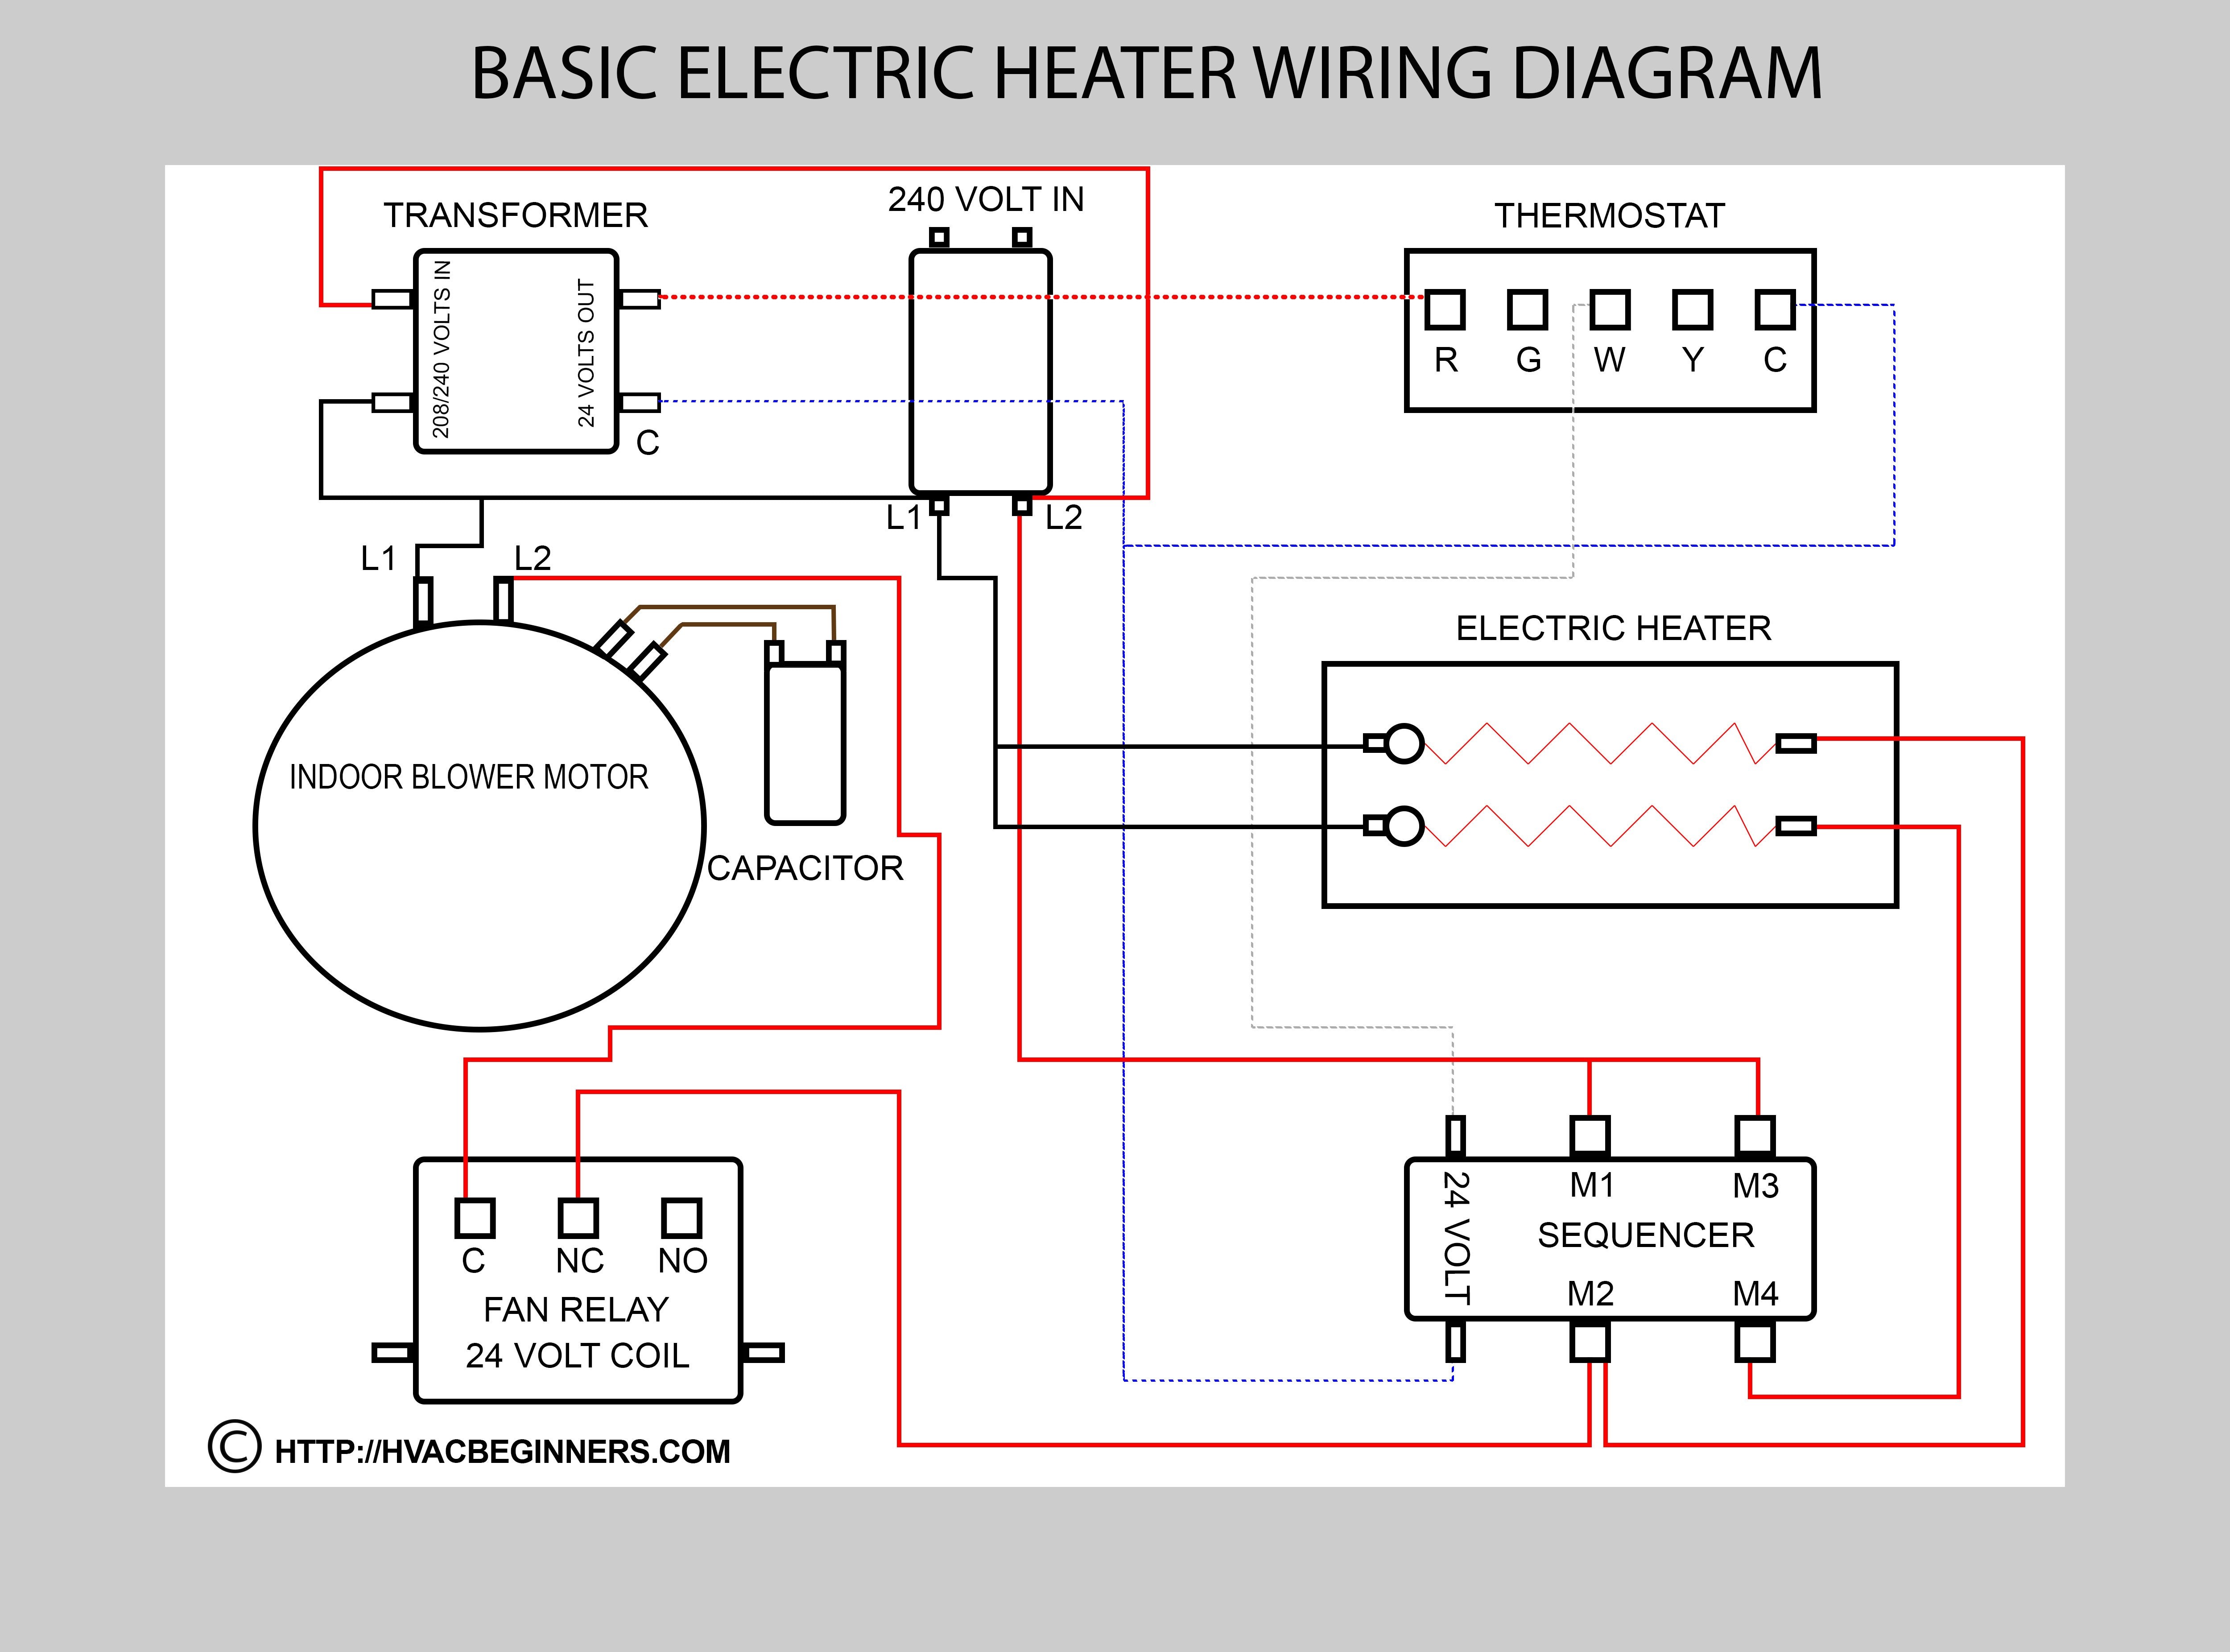 ac pressor wiring diagram wire center u2022 rh prevniga co